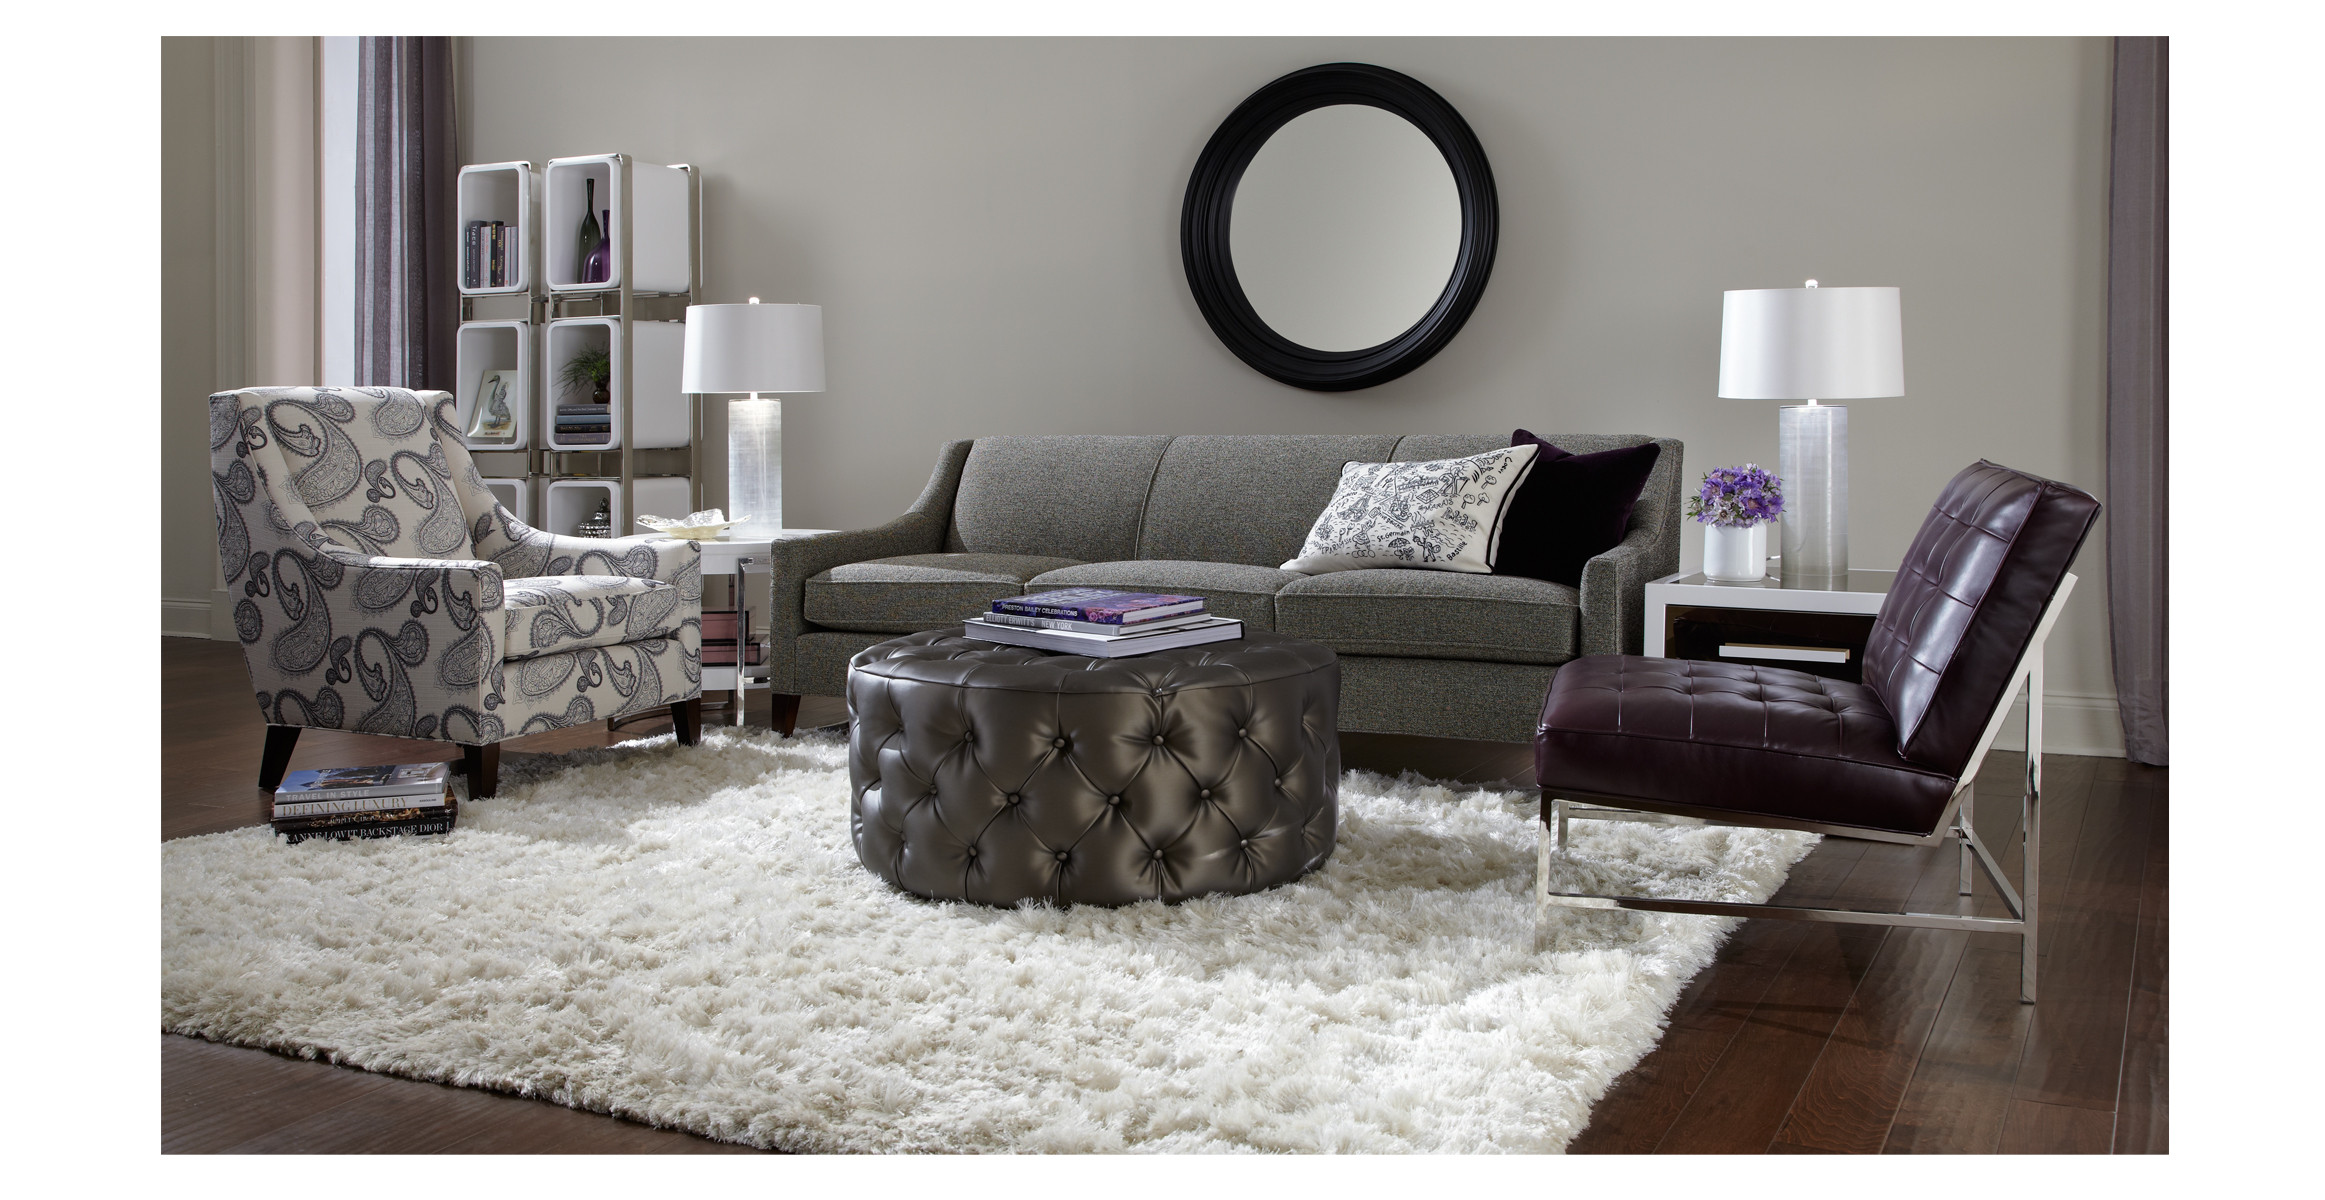 Shaggy Living Room Rugs
 Decor & Accessories Exciting Shag Rug 8x10 Design Ideas